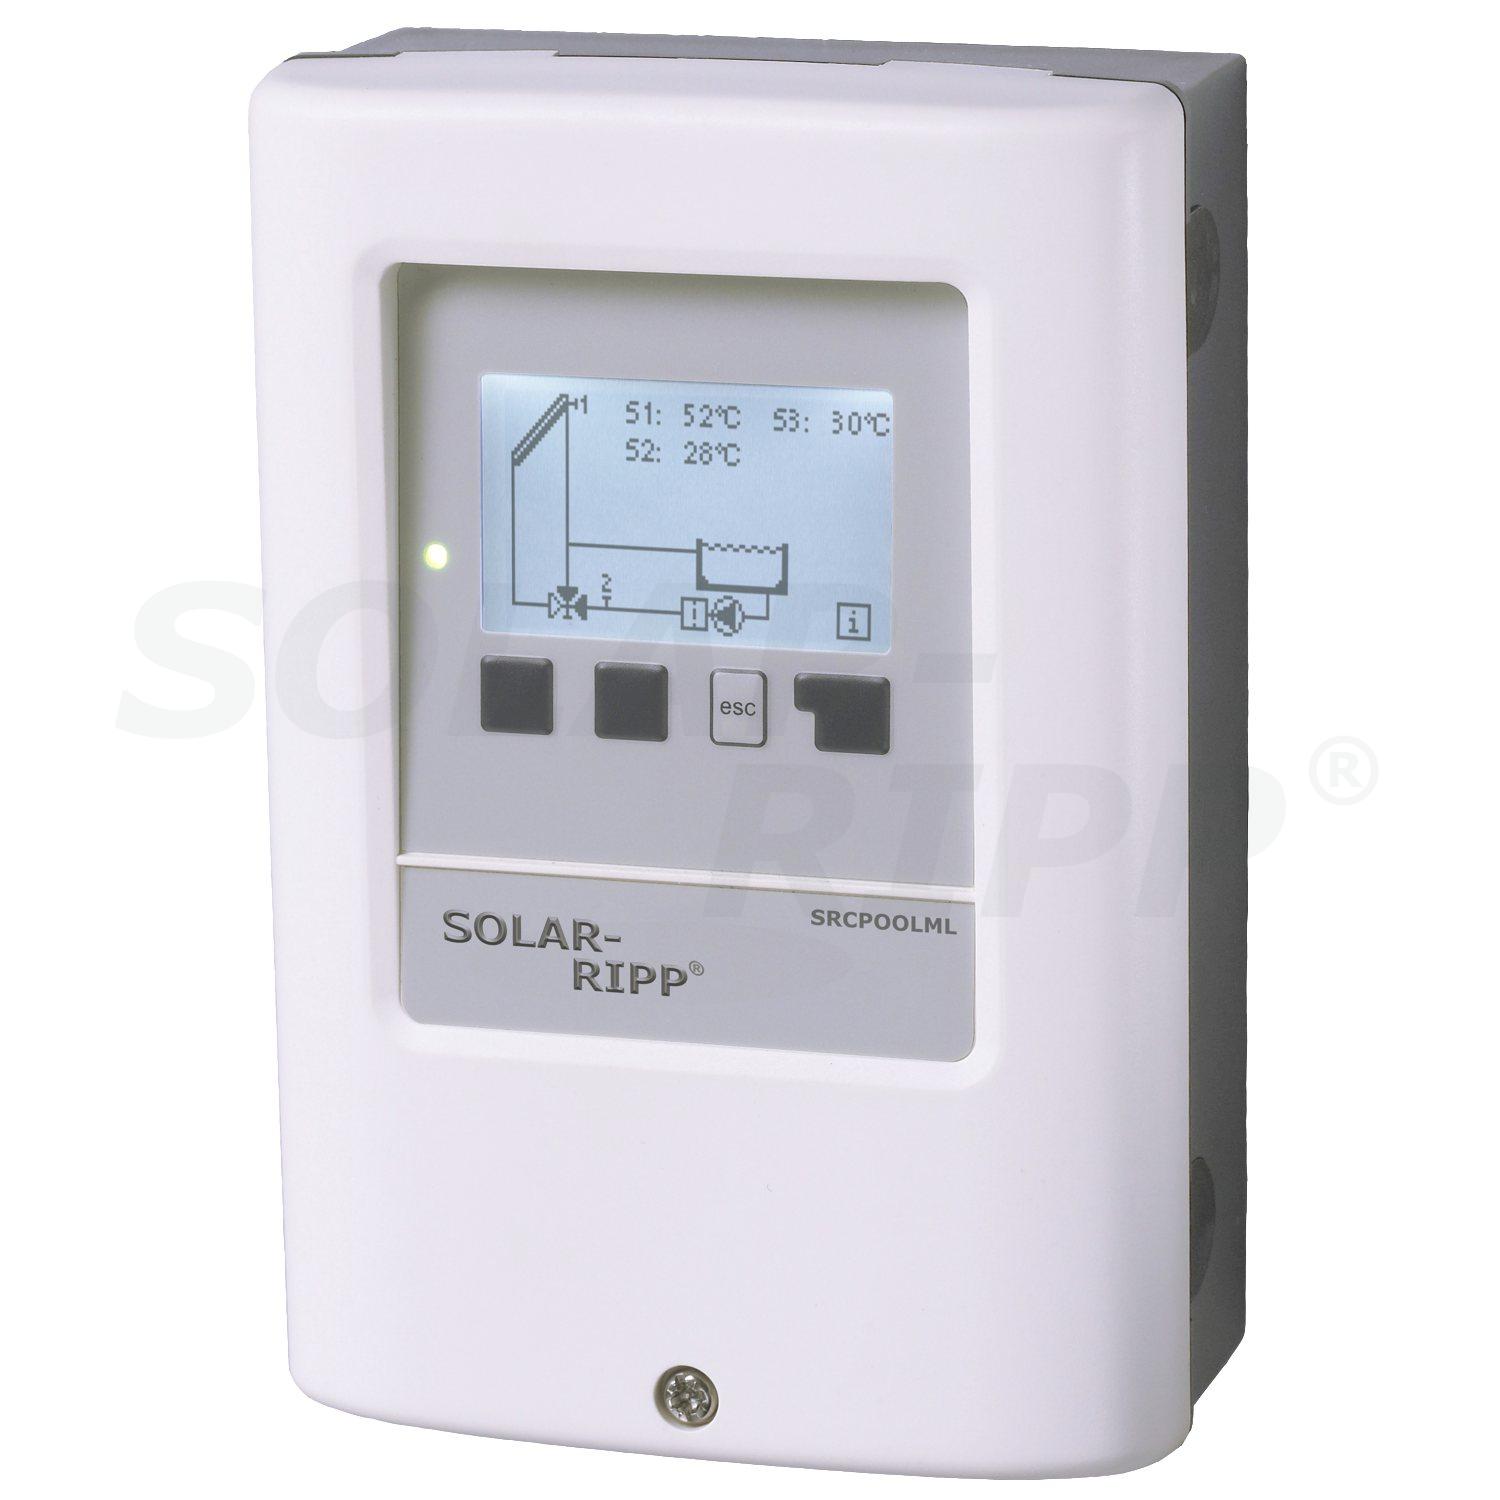 Controlador solar SOLAR-RIPP ® SRCPOOLML...